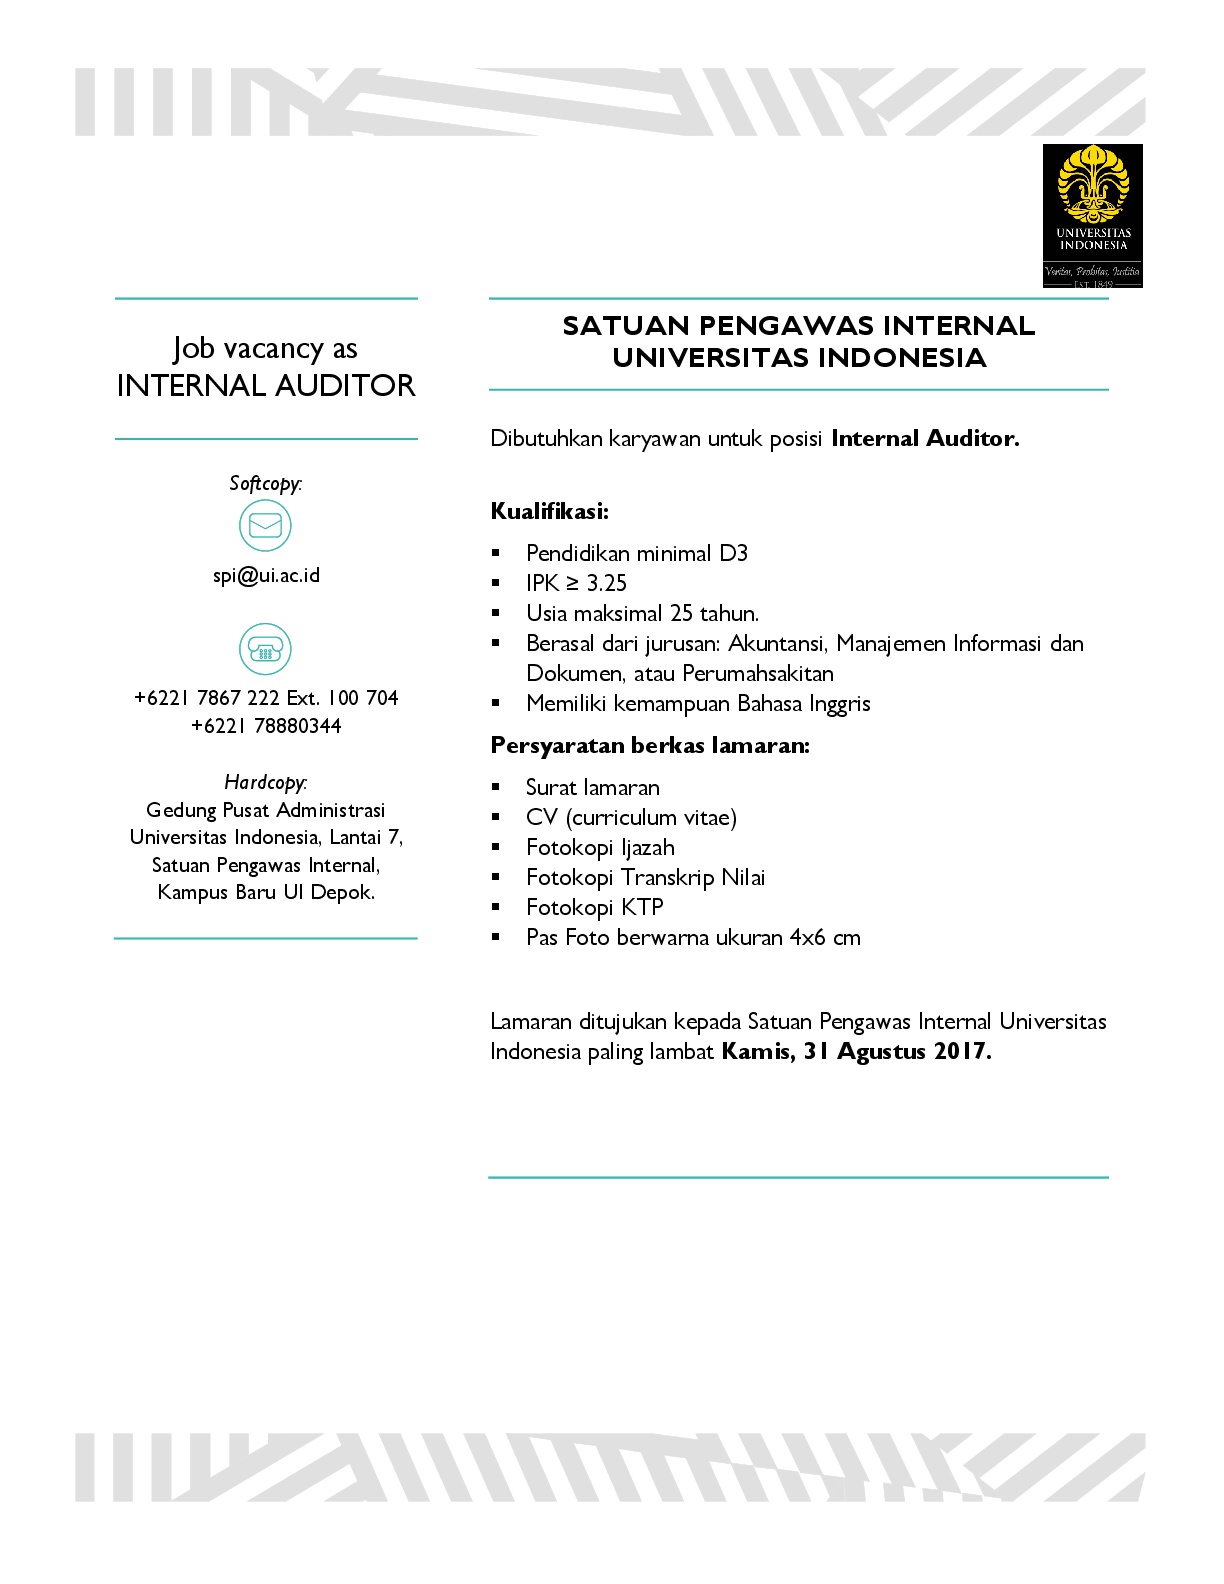 Lowongan Kerja Satuan “Internal Auditor” Pengawas Internal Universitas Indonesia